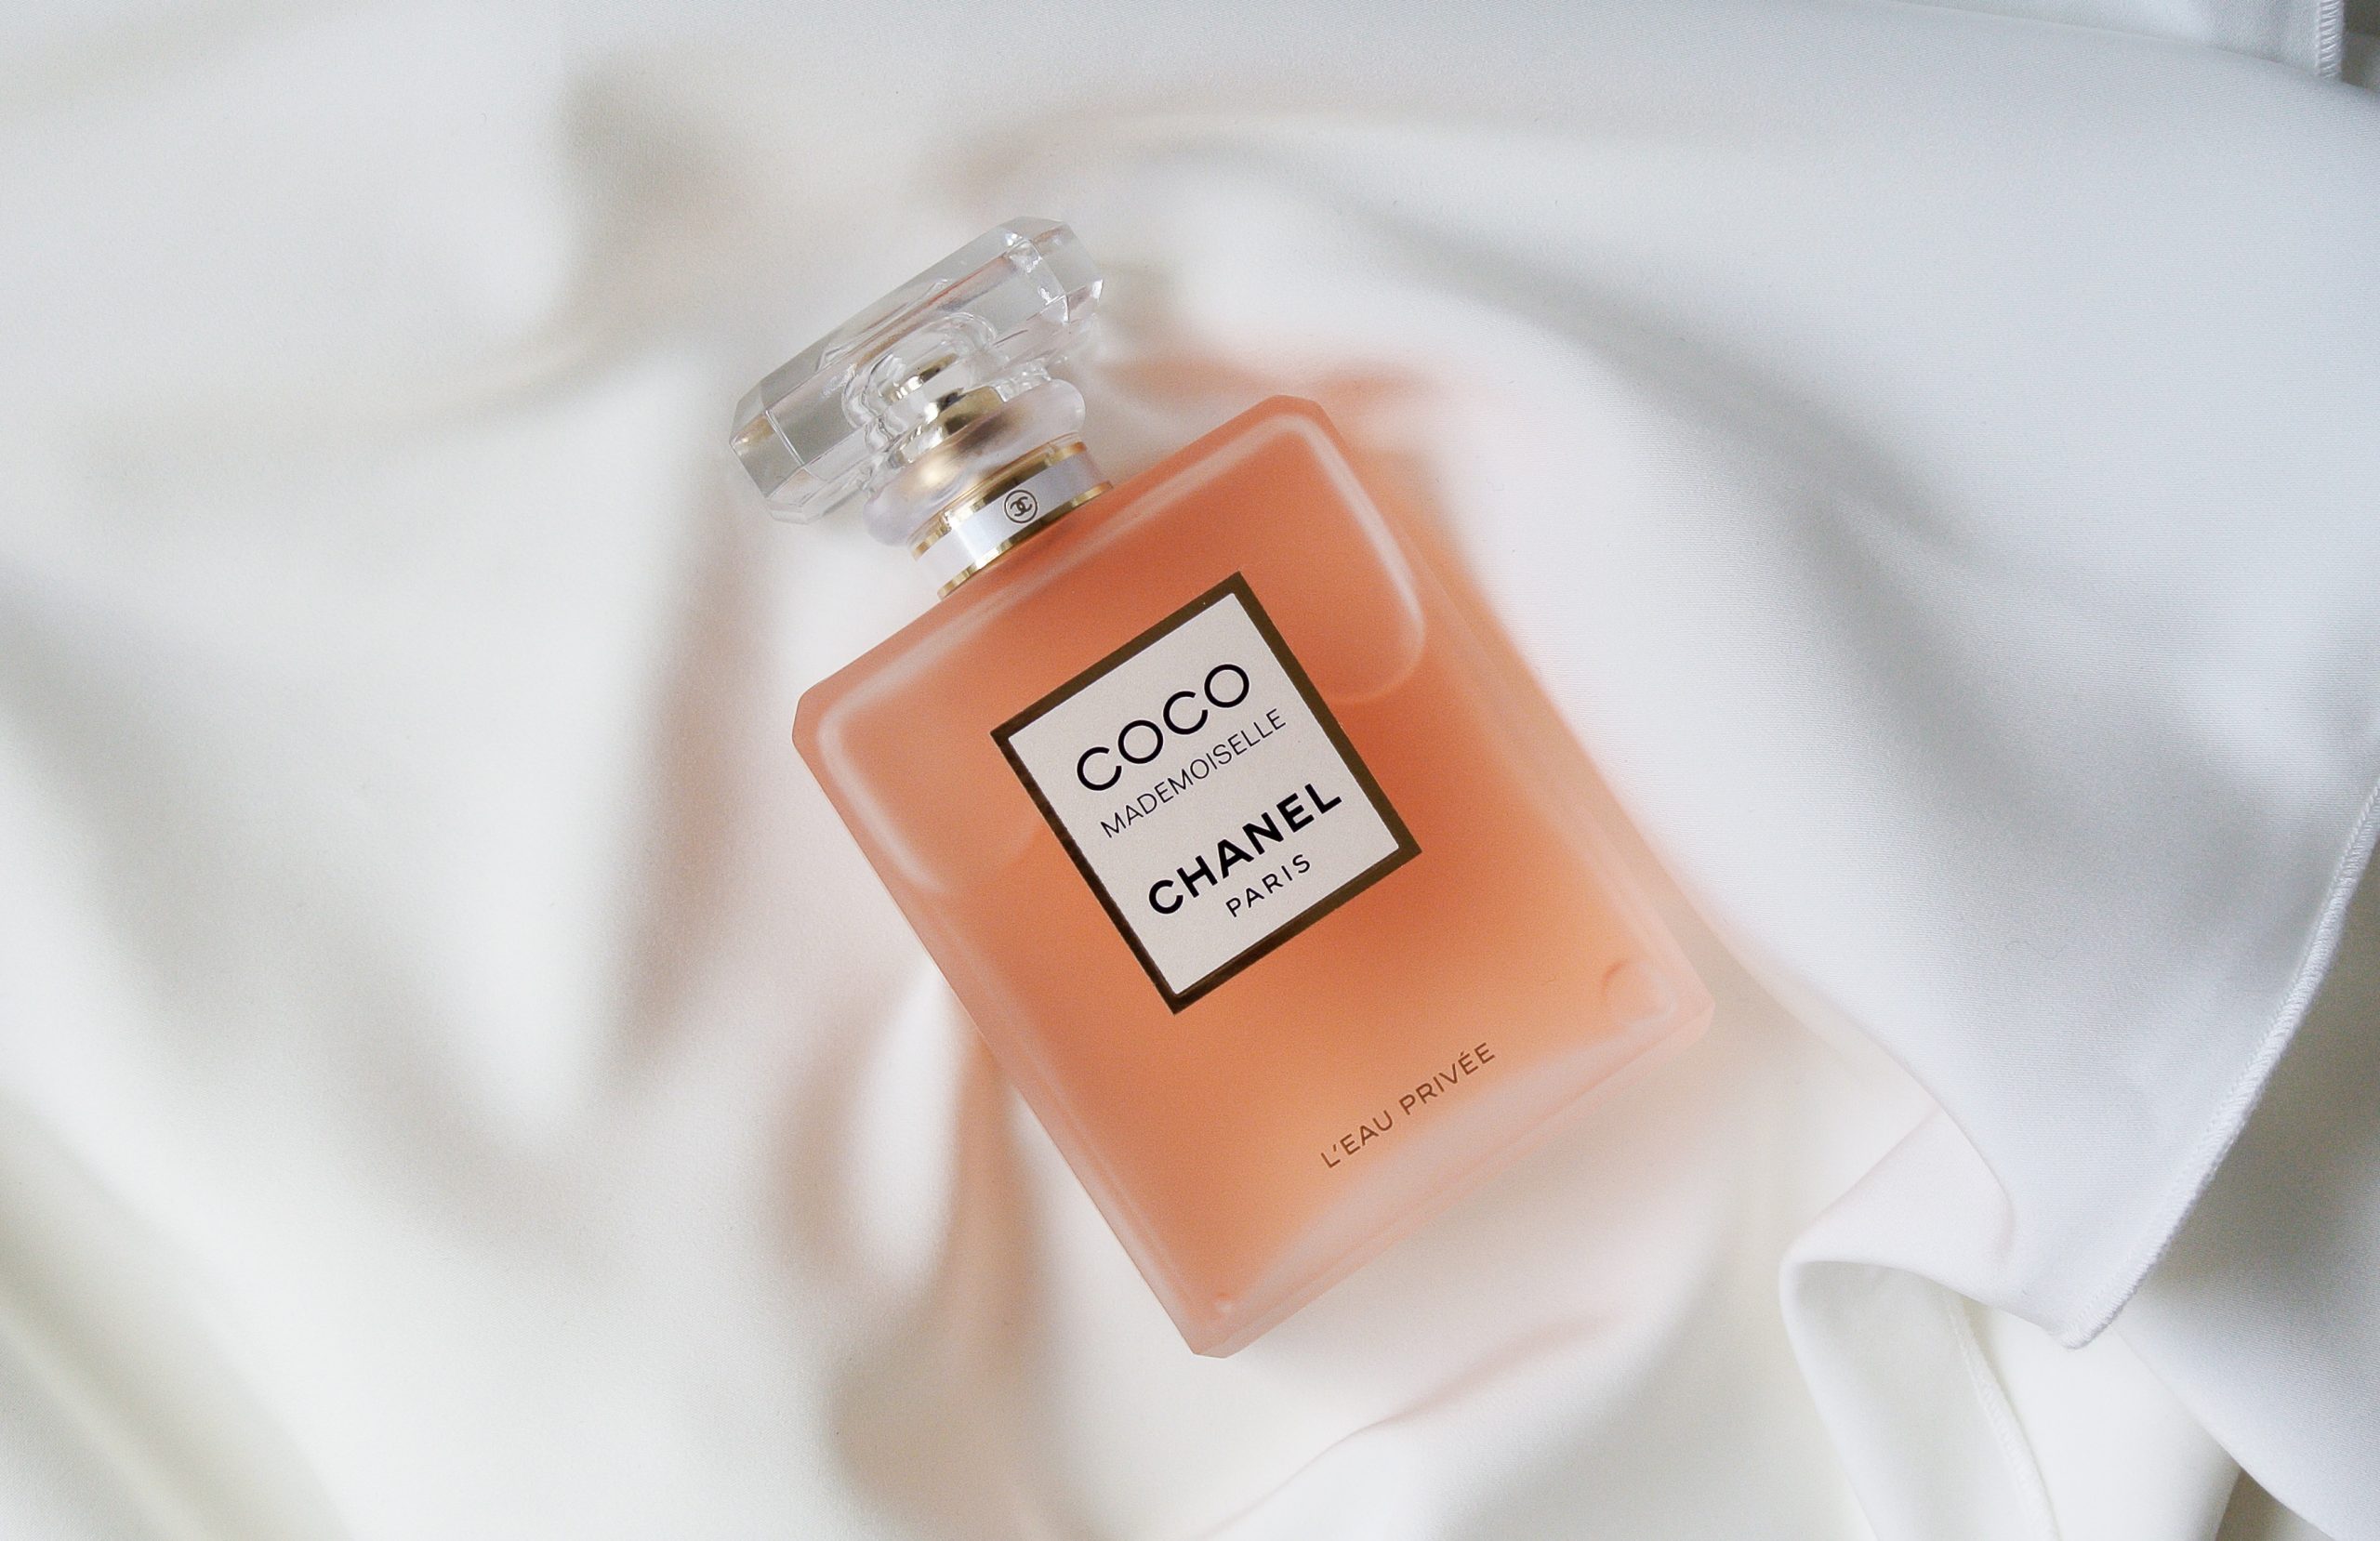 fragrances like coco mademoiselle